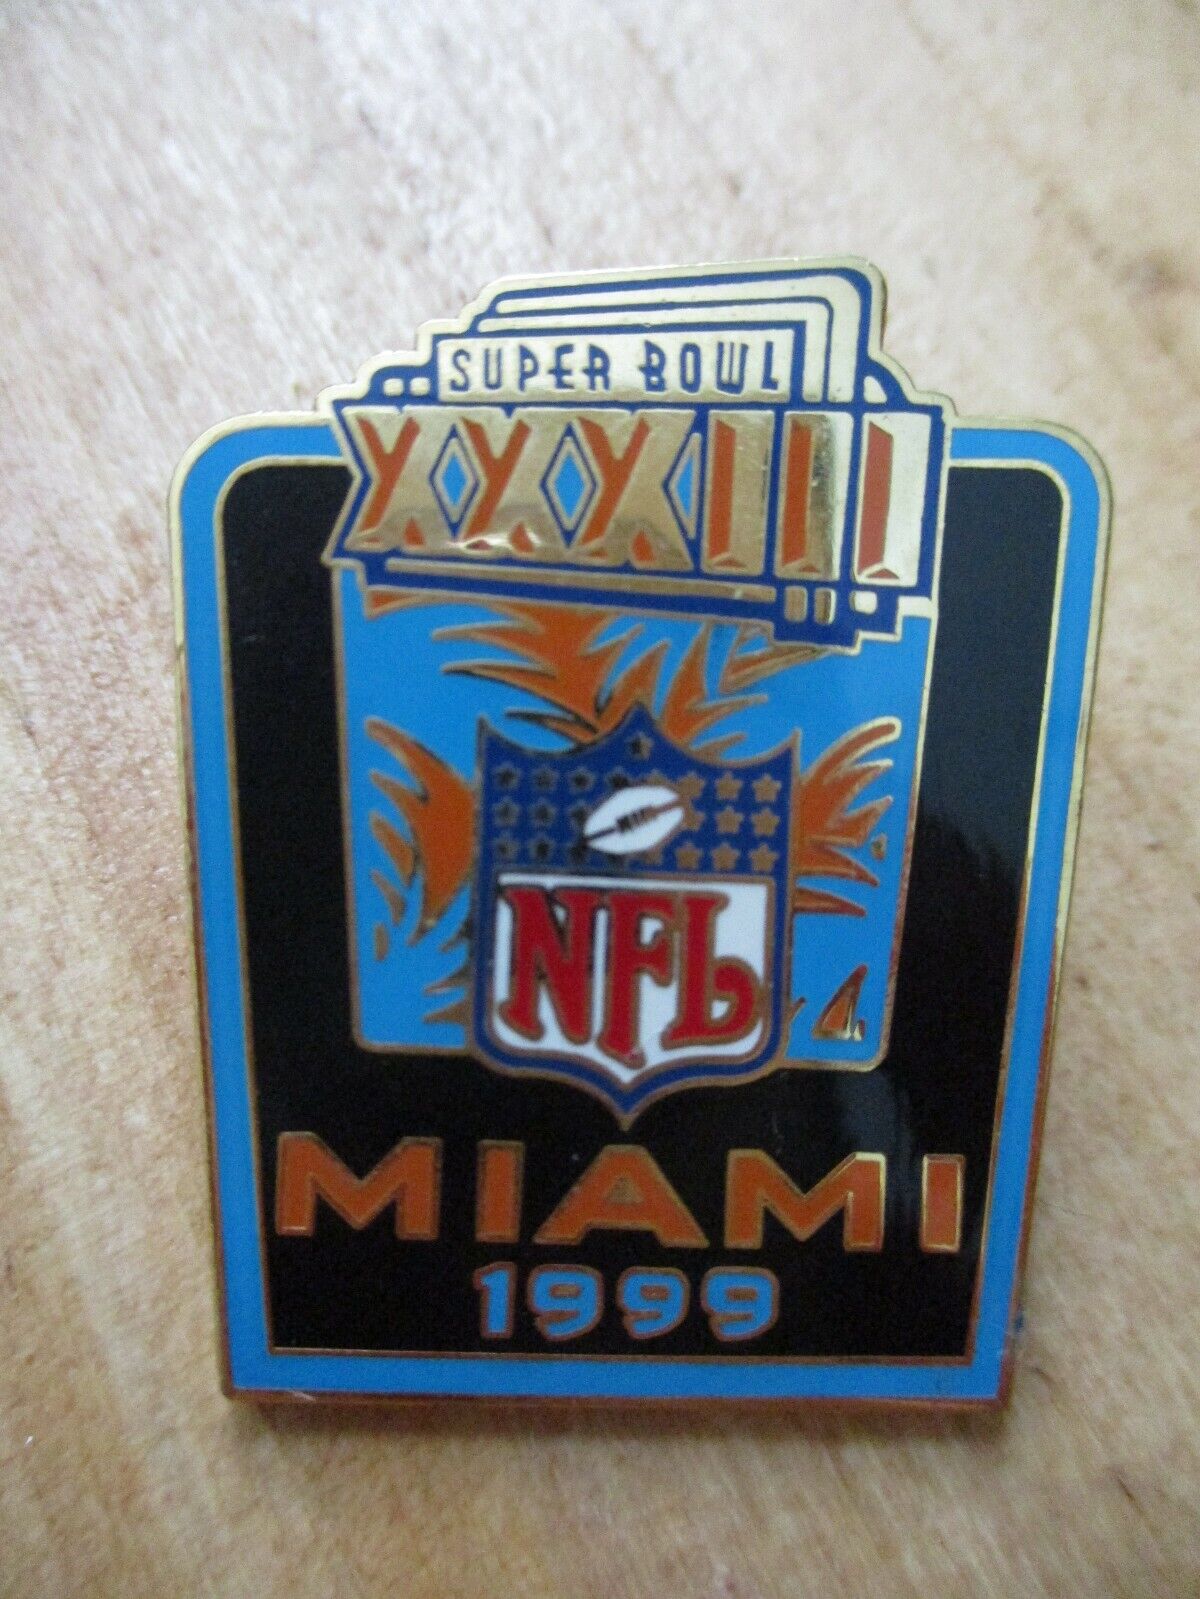 Superbowl 33 XXXIII NFL Logo Miami 1999 Pin Broncos vs Falcons